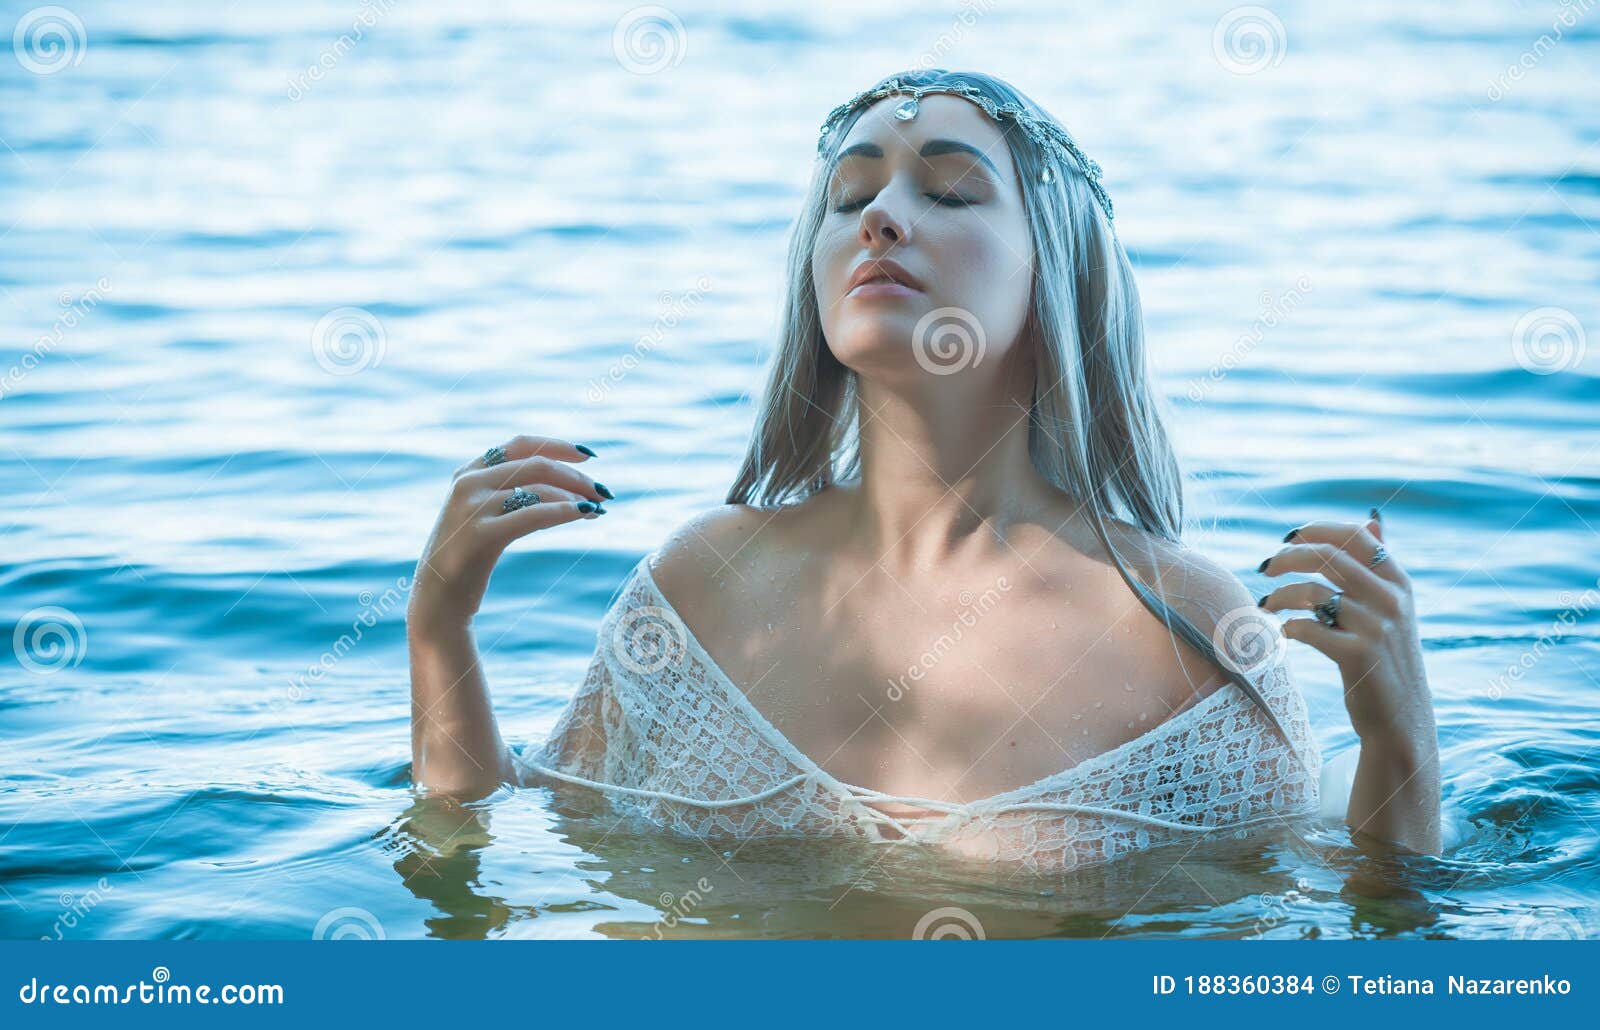 pagan rituals in lake, young woman in white